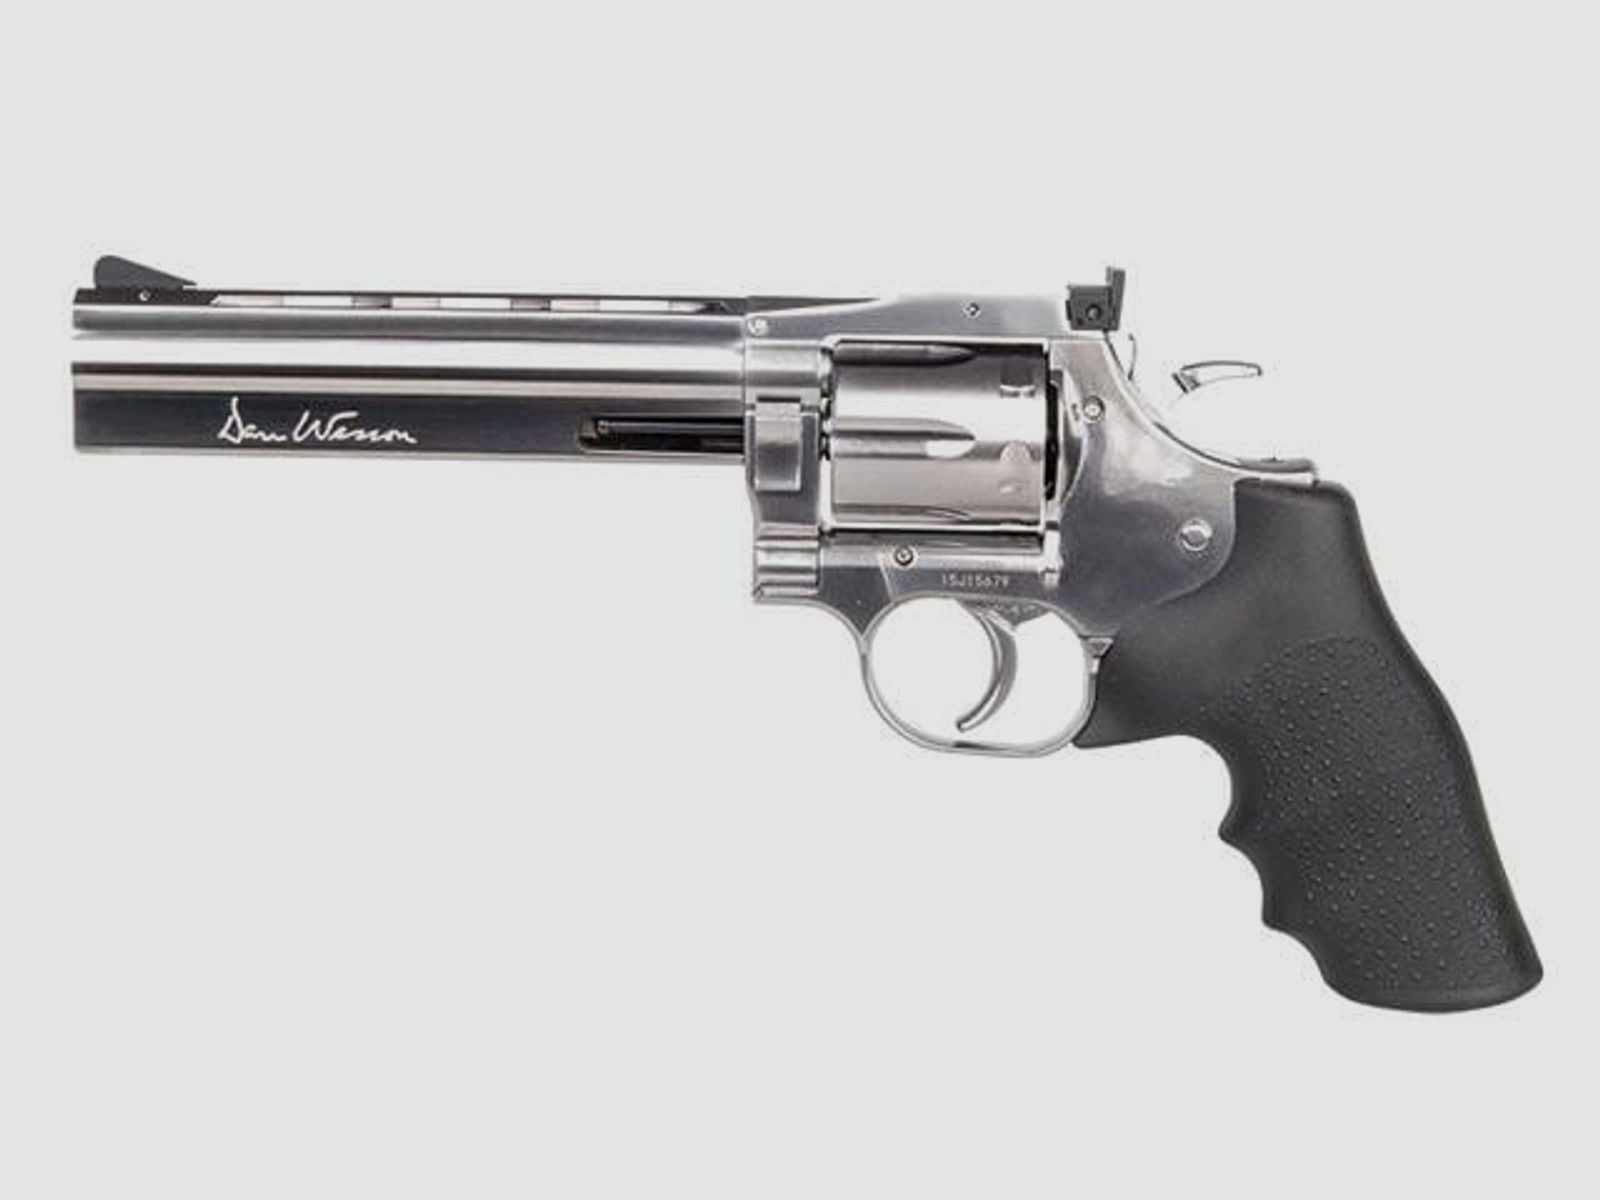 Dan Wesson 715 6' Luftdruck Revolver 4,5 mm